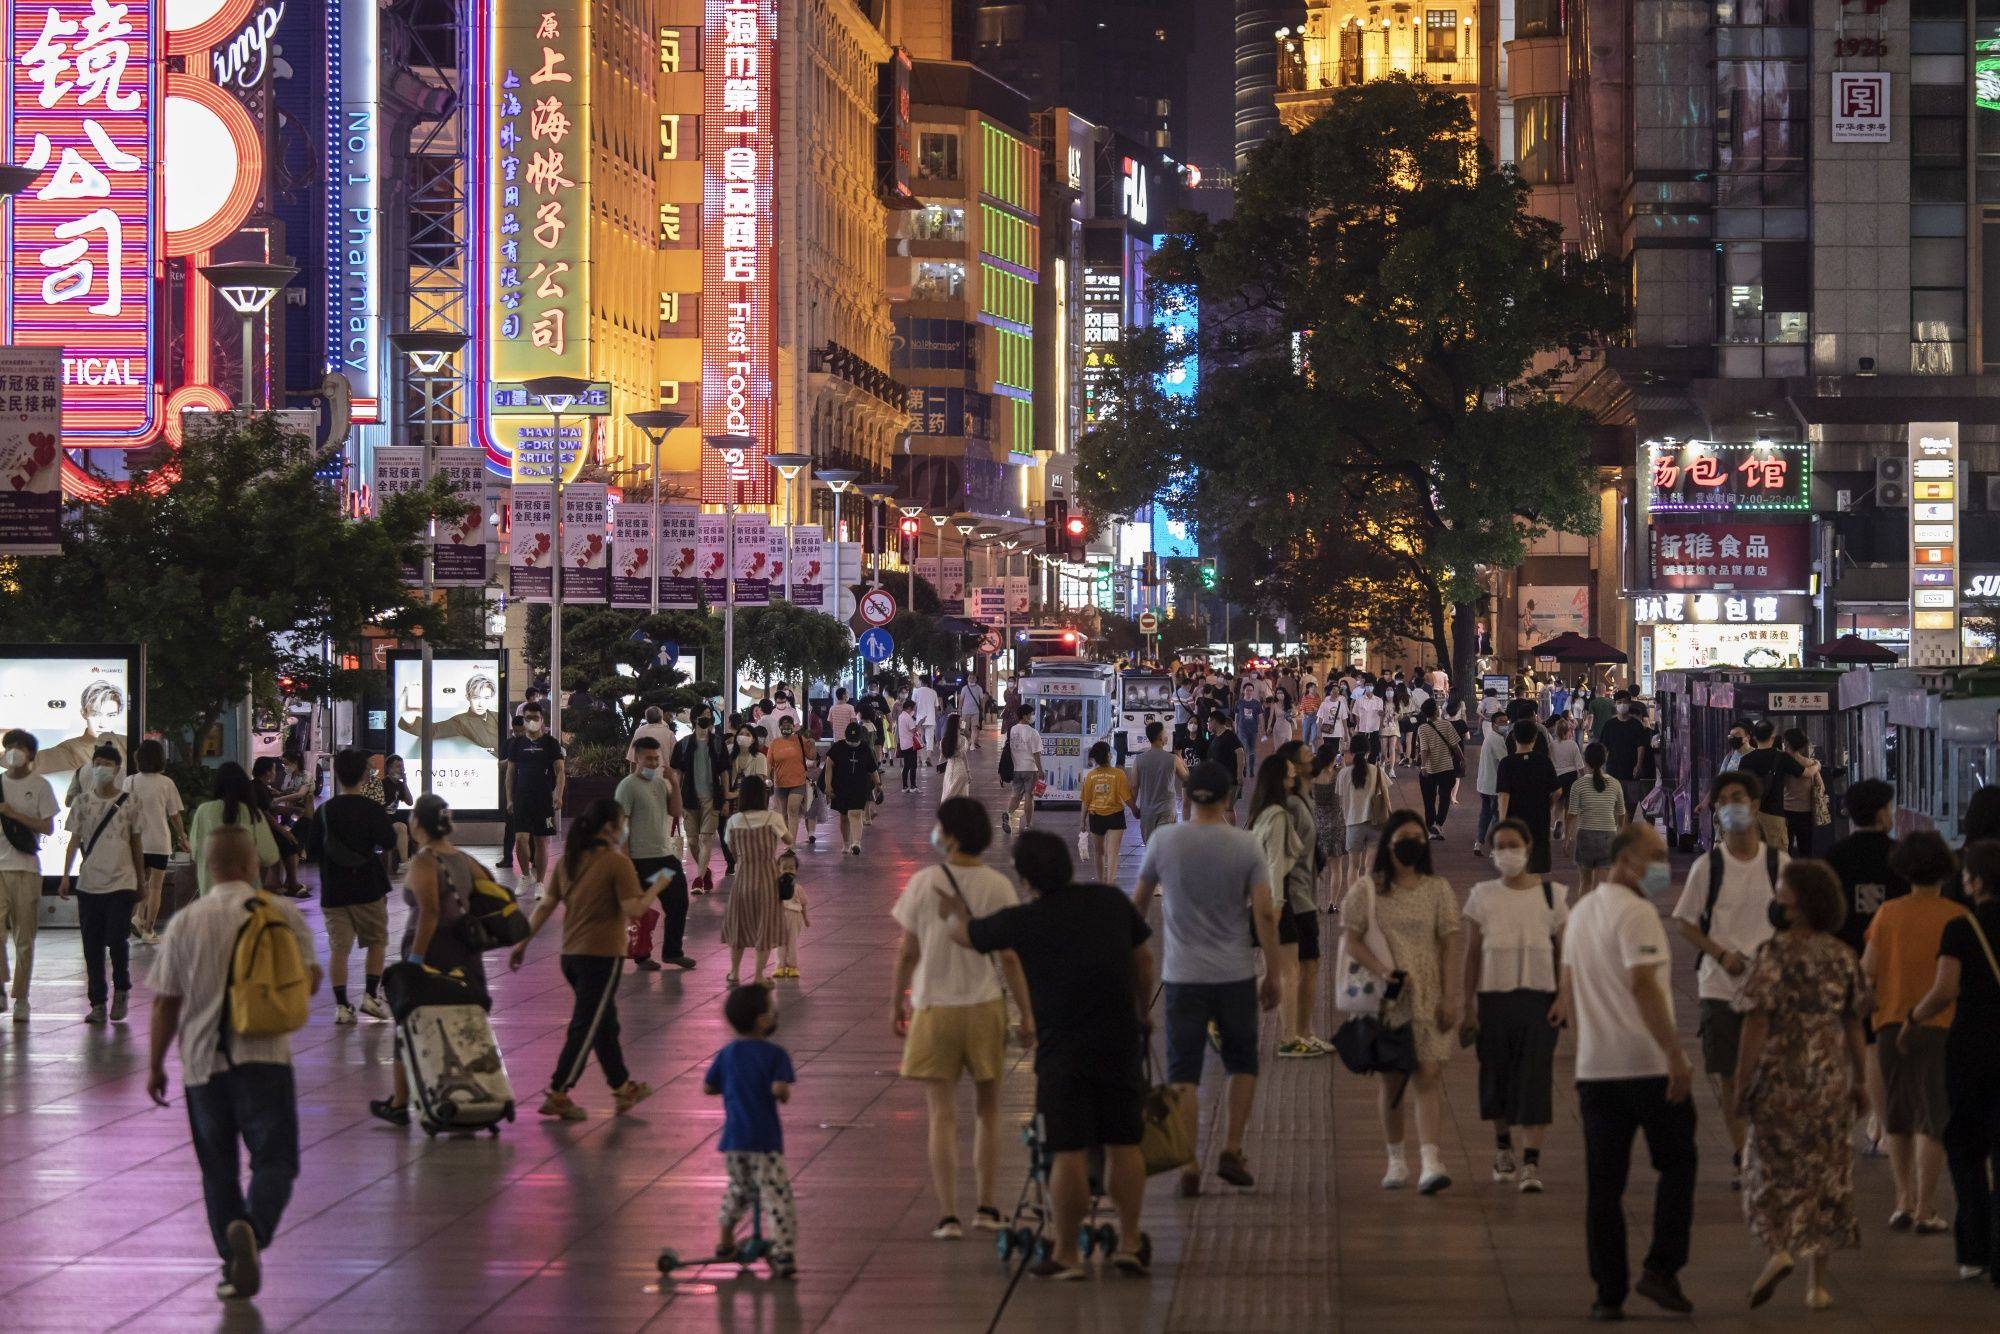 People walk along Nanjing Road, Shanghai’s famous shopping street. Photo: Bloomberg.